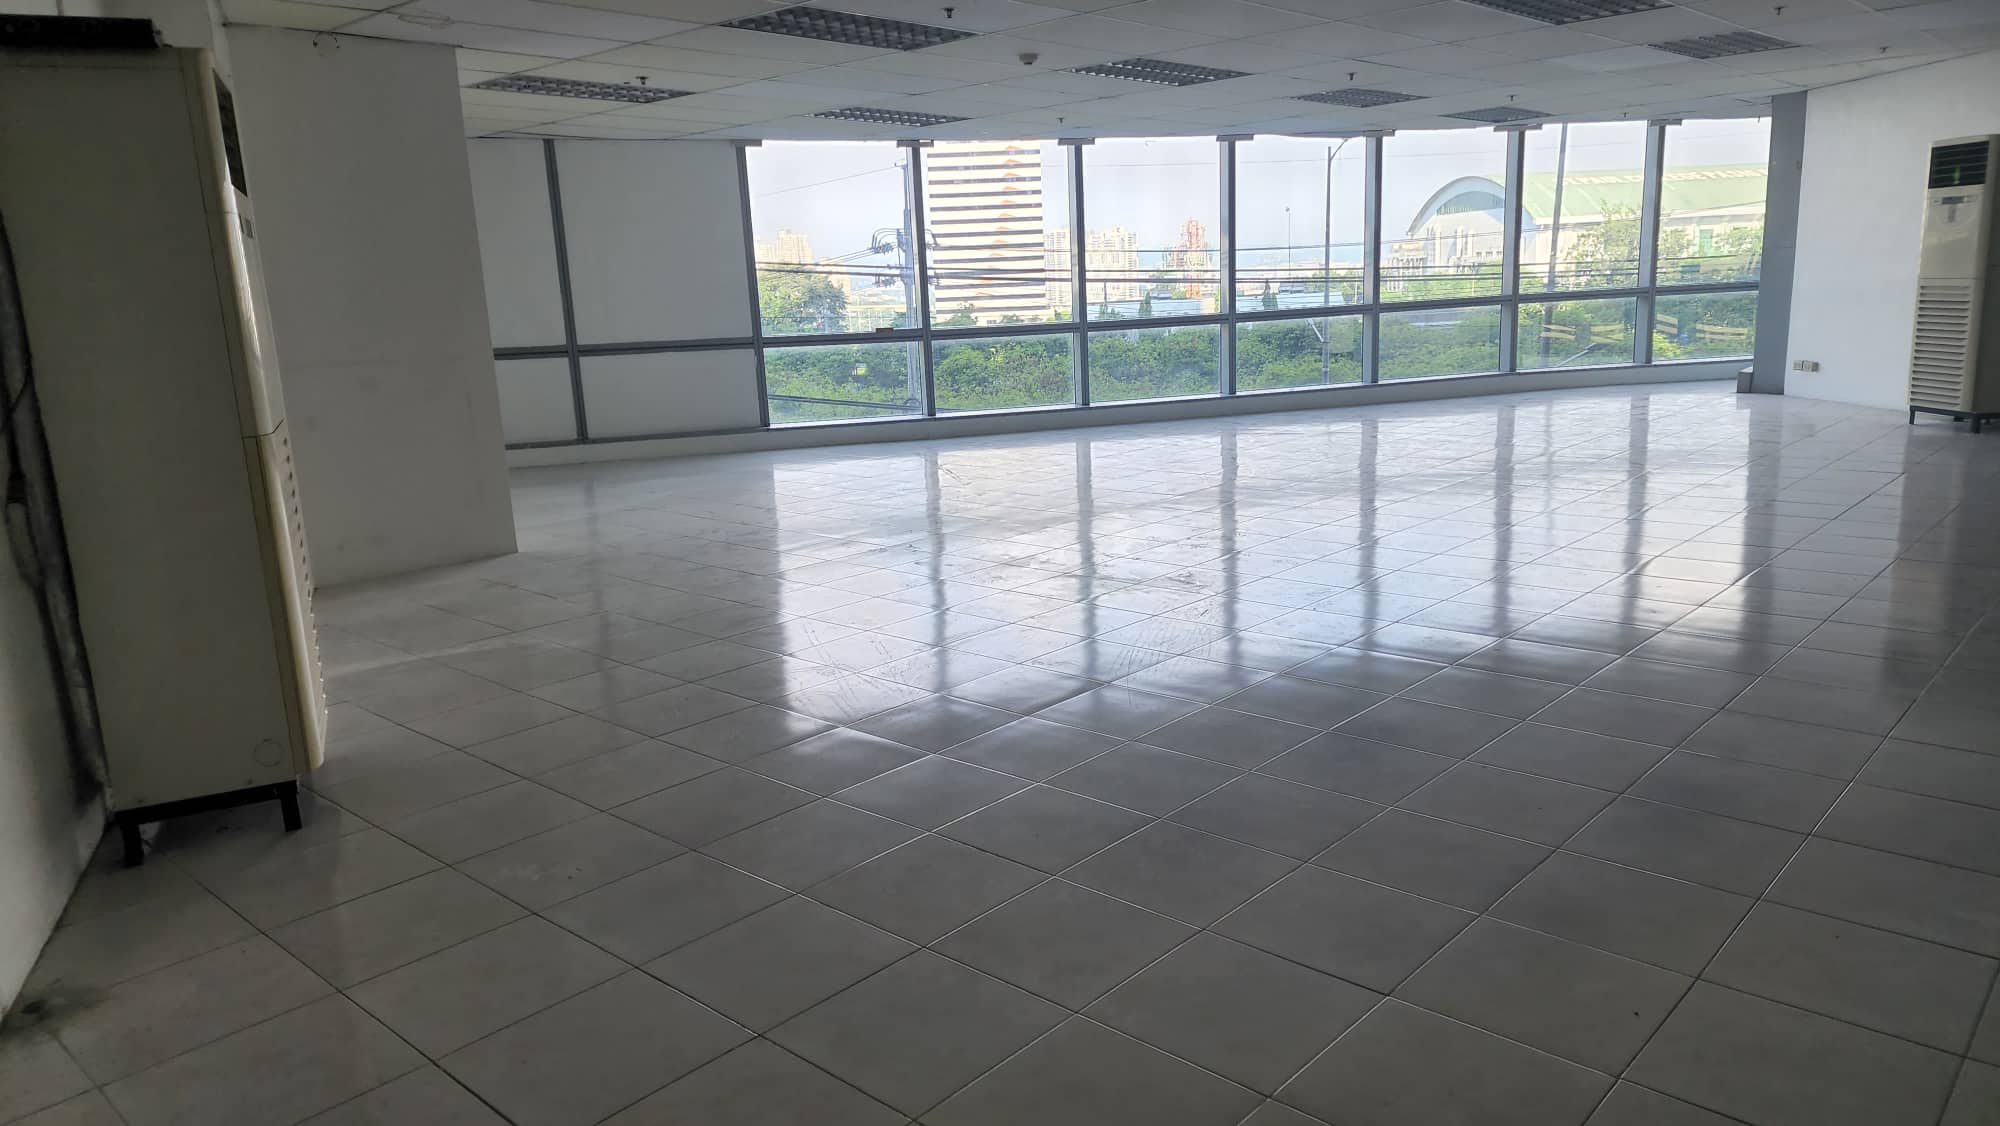 PEZA BPO Office Space Rent Lease Ortigas Center 256 sqm